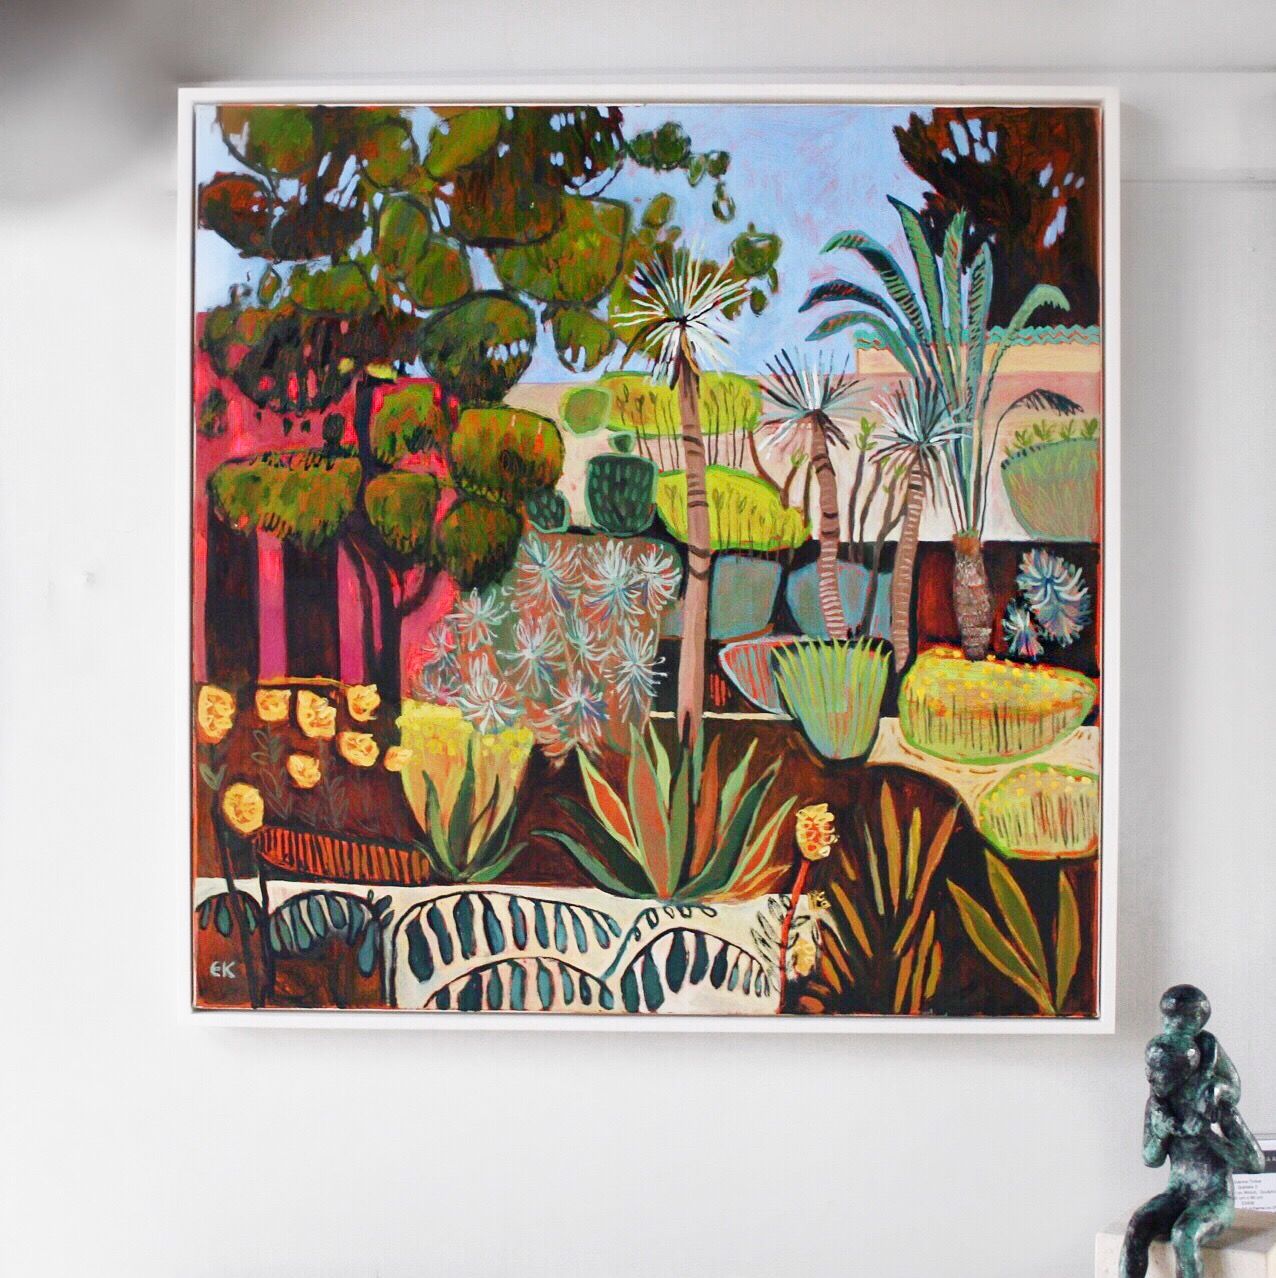 Le Jardin Secret with Date Palms and Bright Wall, Marrakech by Elaine Kazimierczuk - Secondary Image